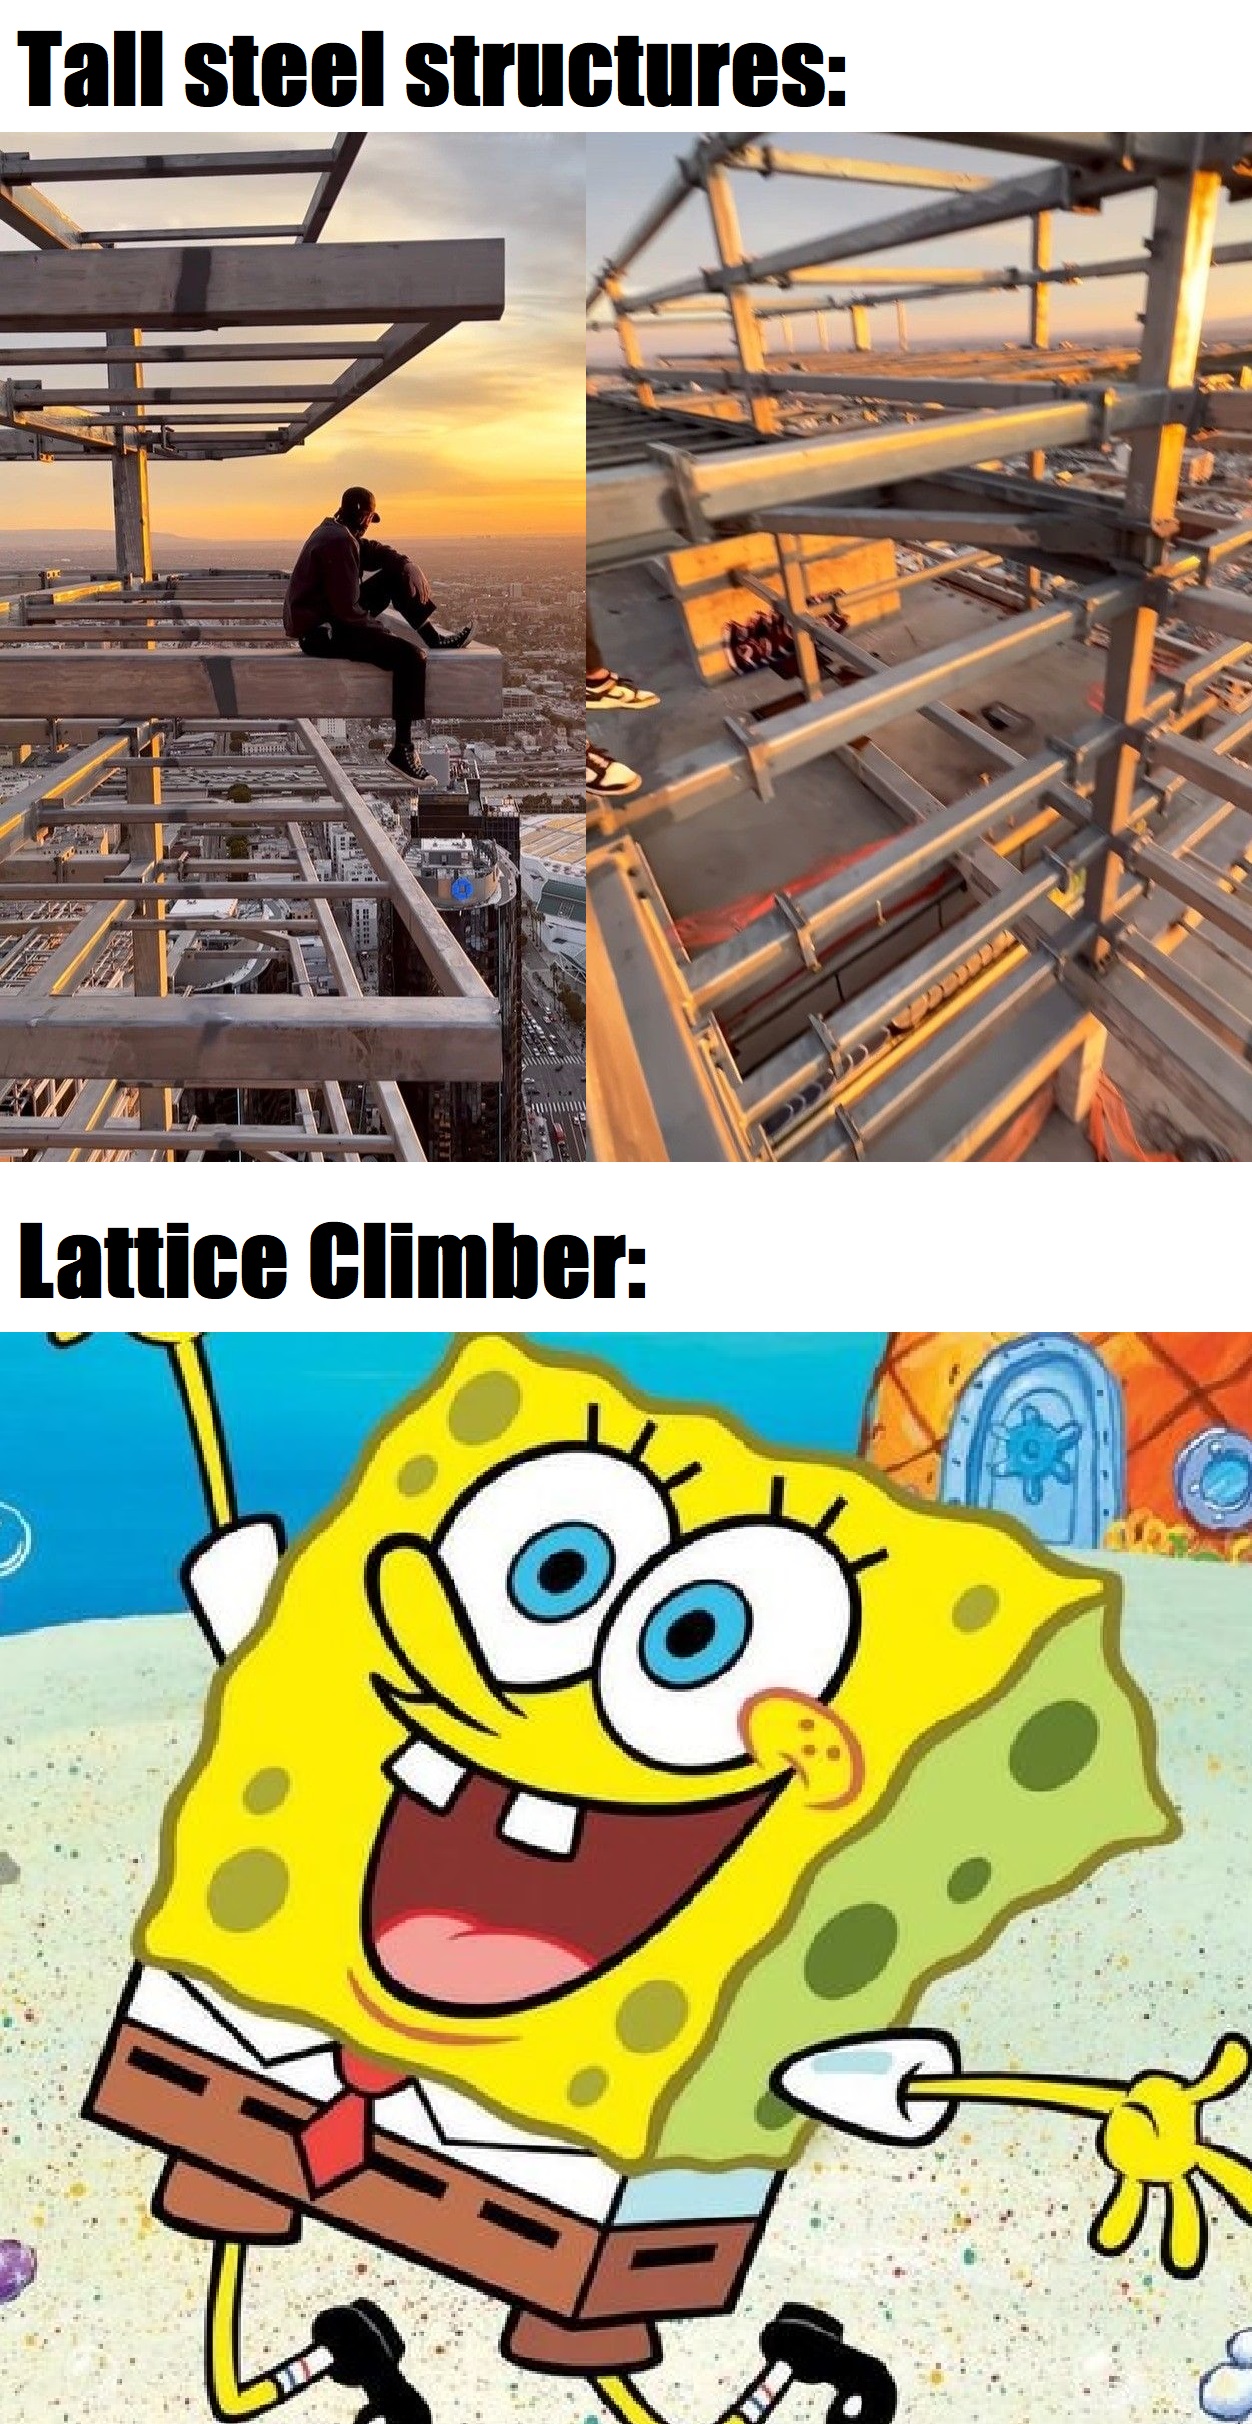 High Quality Climbers Blank Meme Template